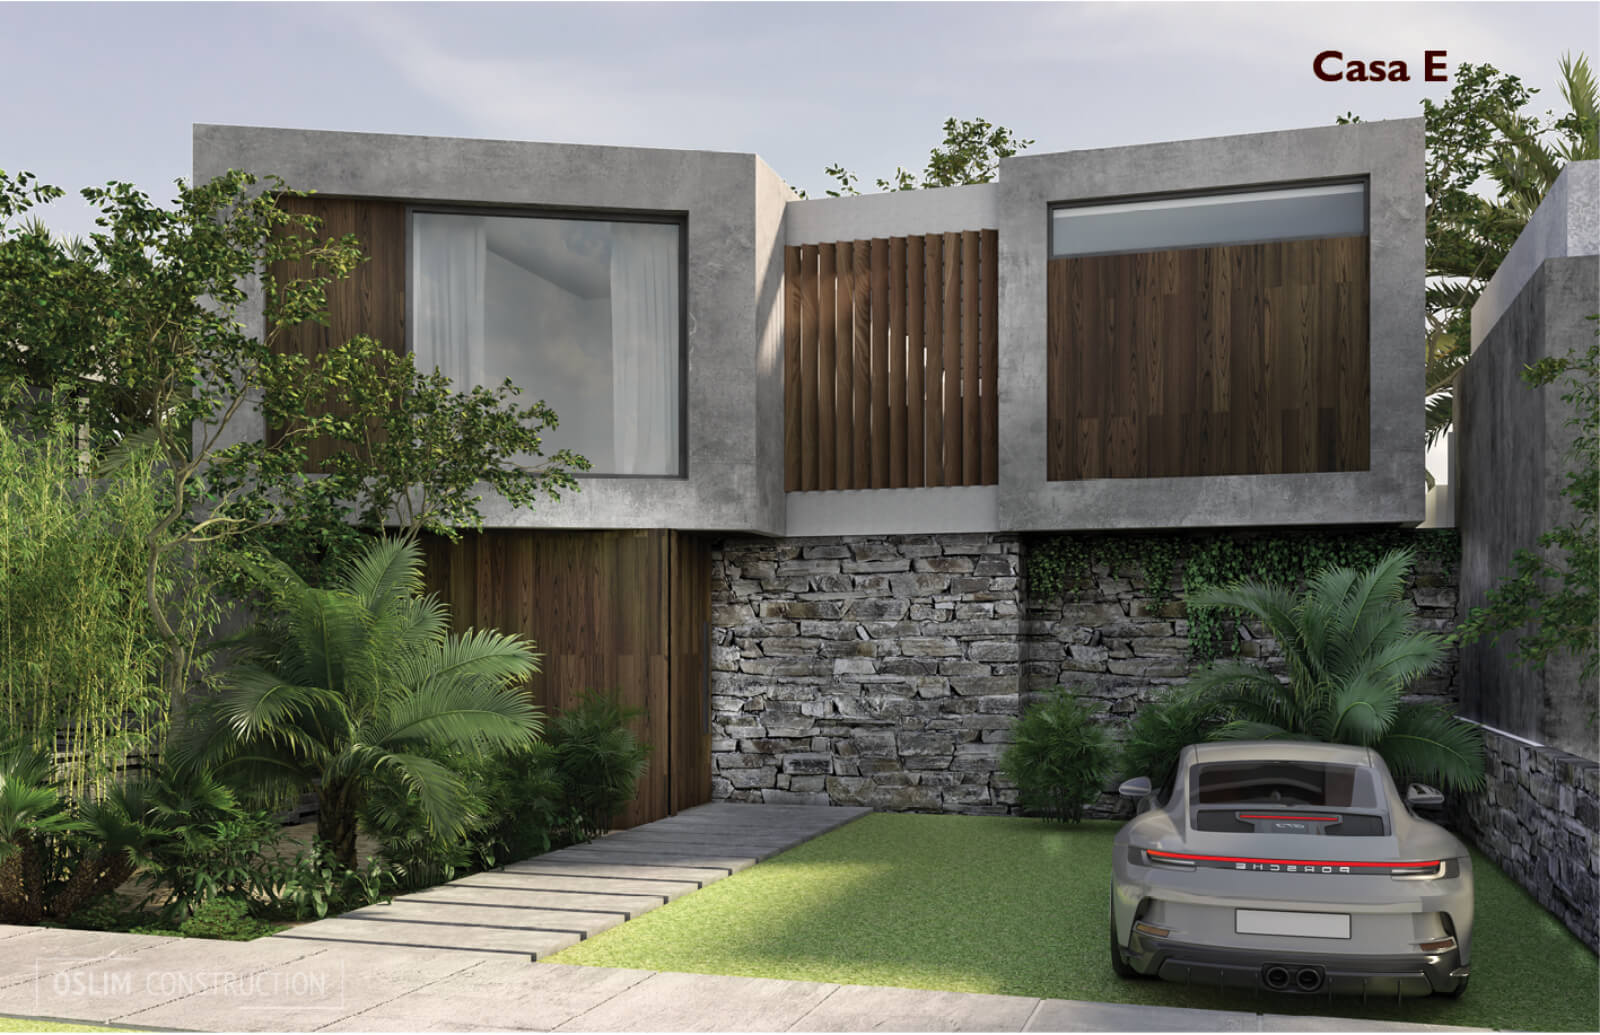 Casa con alberca privada, roof garden , ventanas de pared completa con vistas verdes, concierge, chofer, gimnasio, alberca 958m2